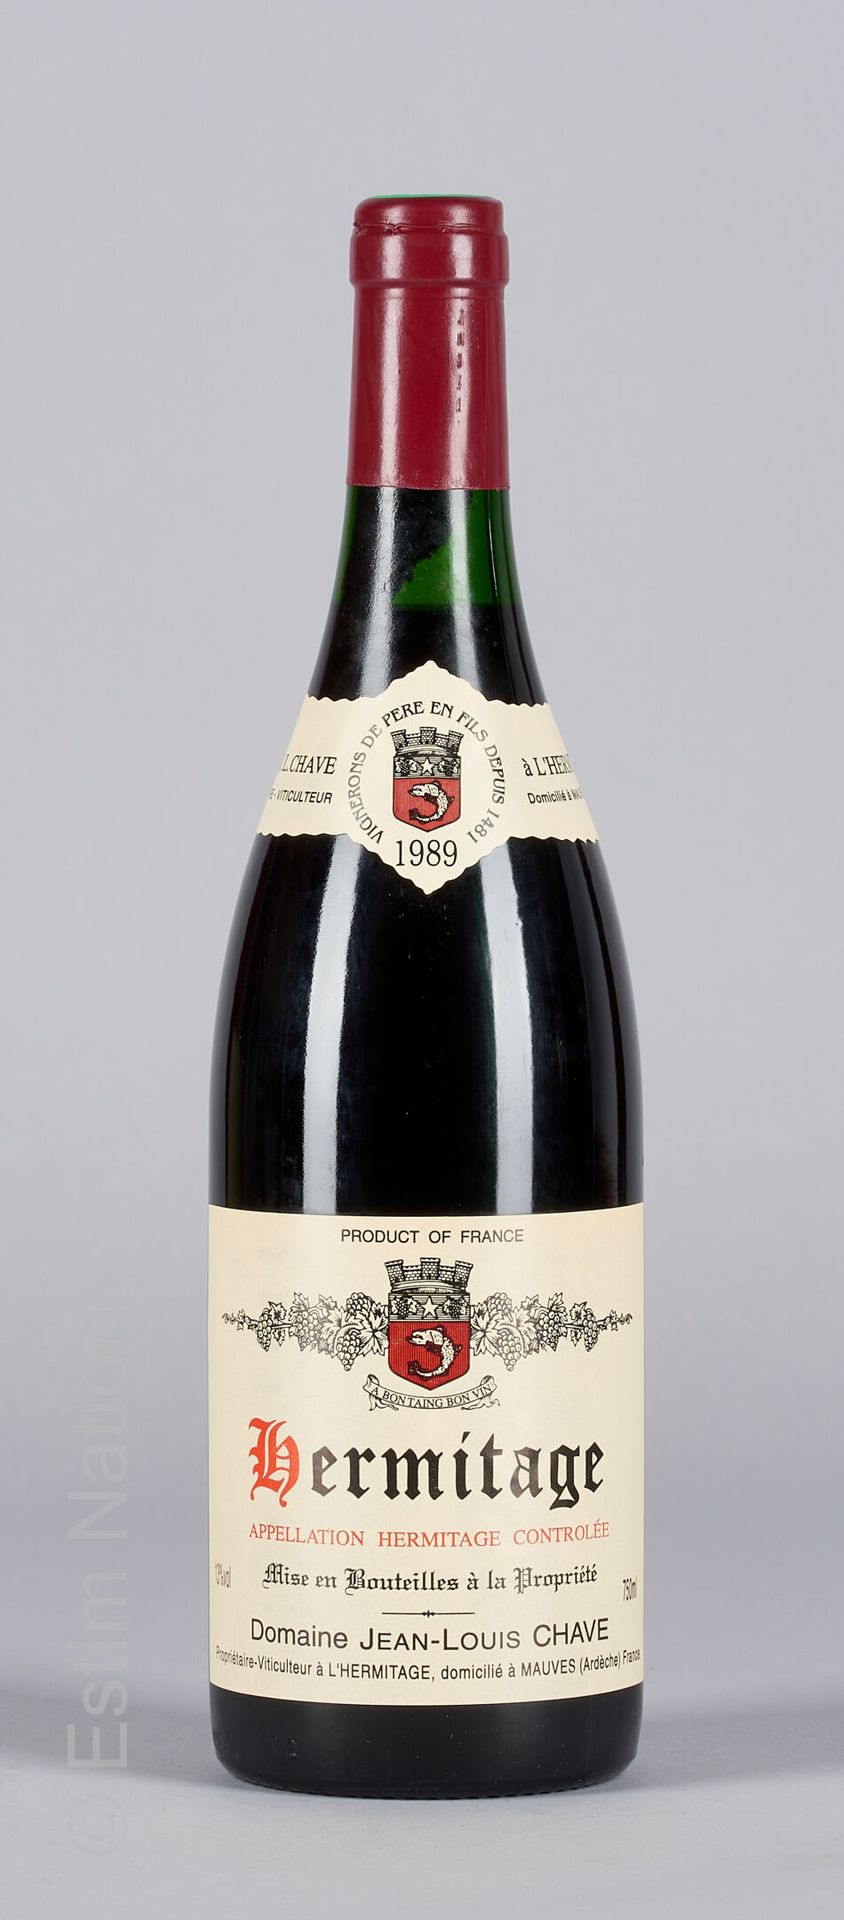 HERMITAGE ROUGE 1 bottiglia HERMITAGE 1989 Jean-Louis Chave

(N. Tra 2 e 2,5 cm)